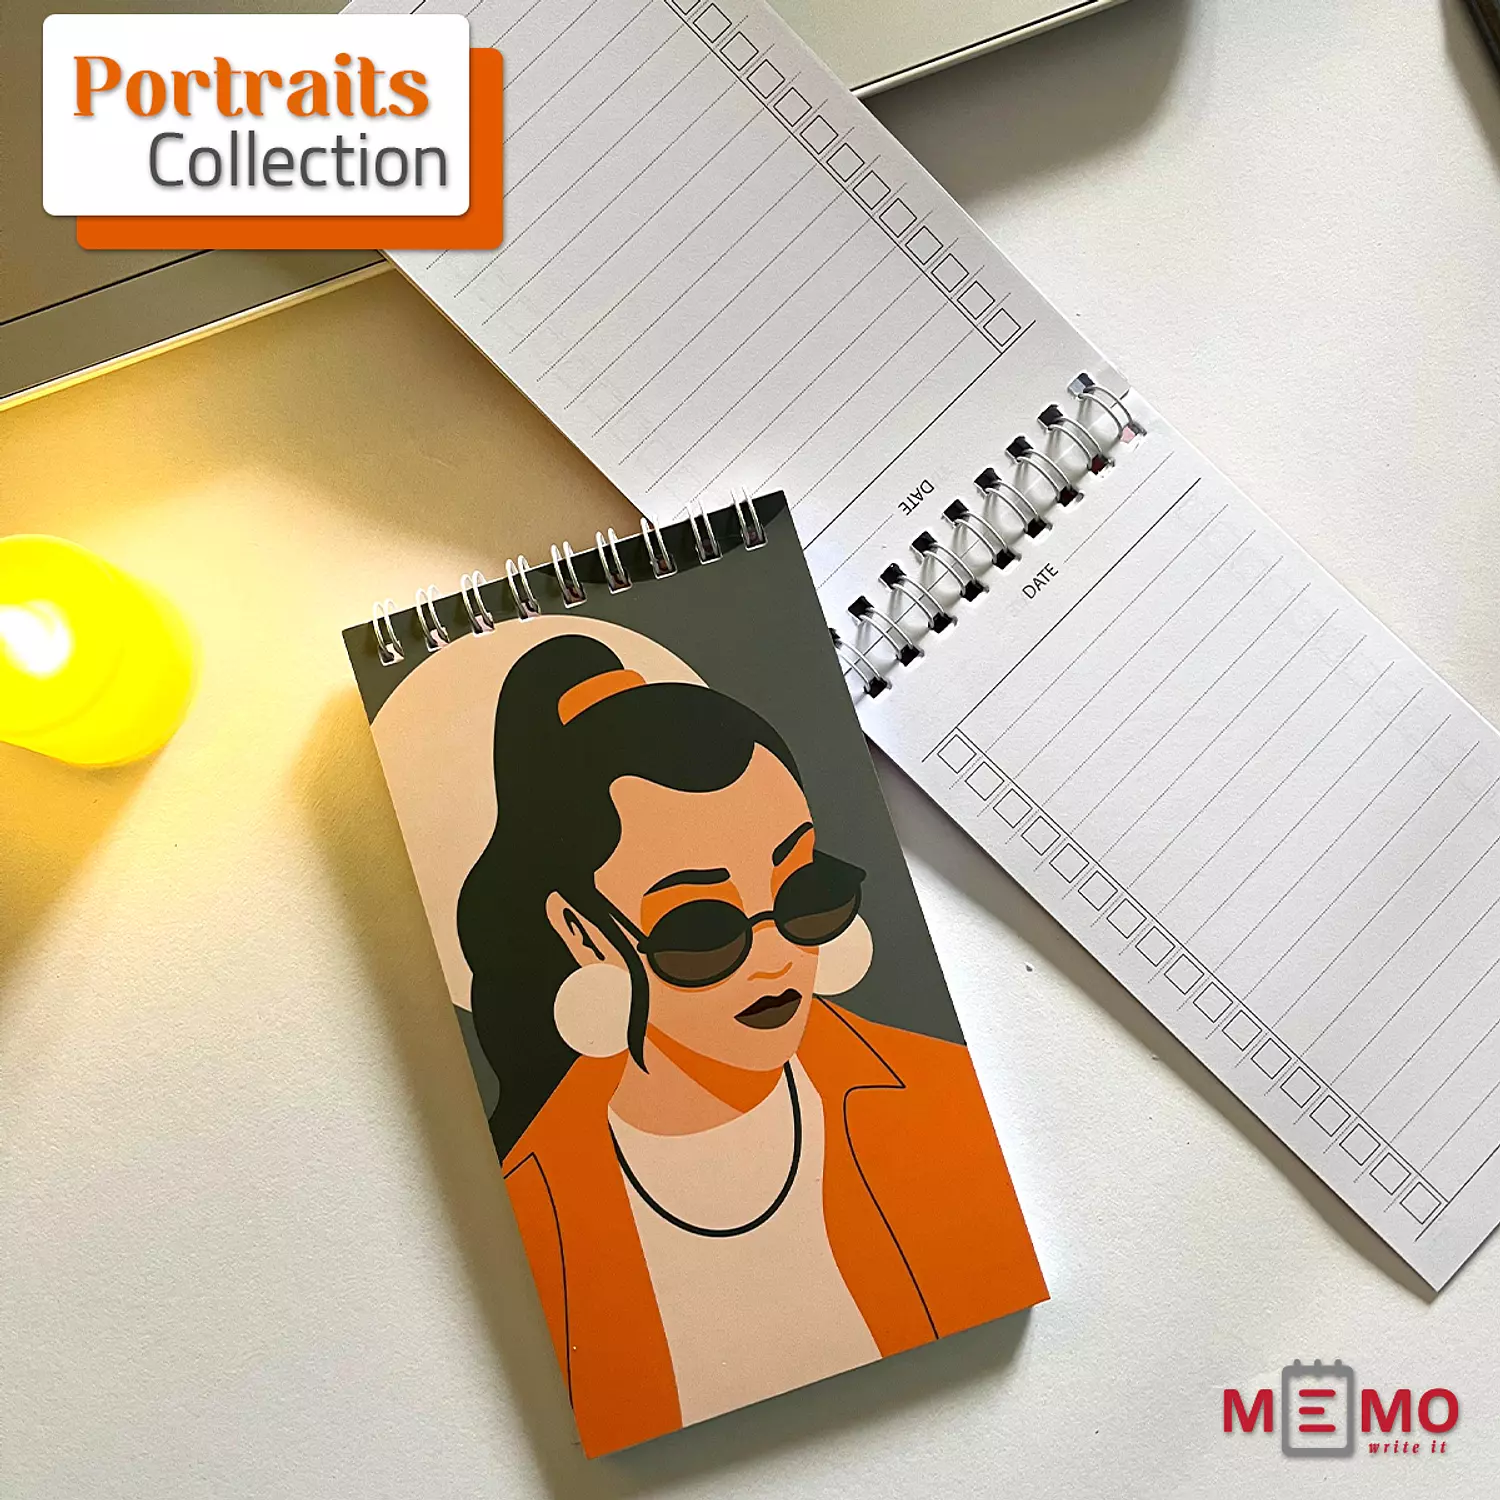  Memo (portraits collection ) To-Do List  9